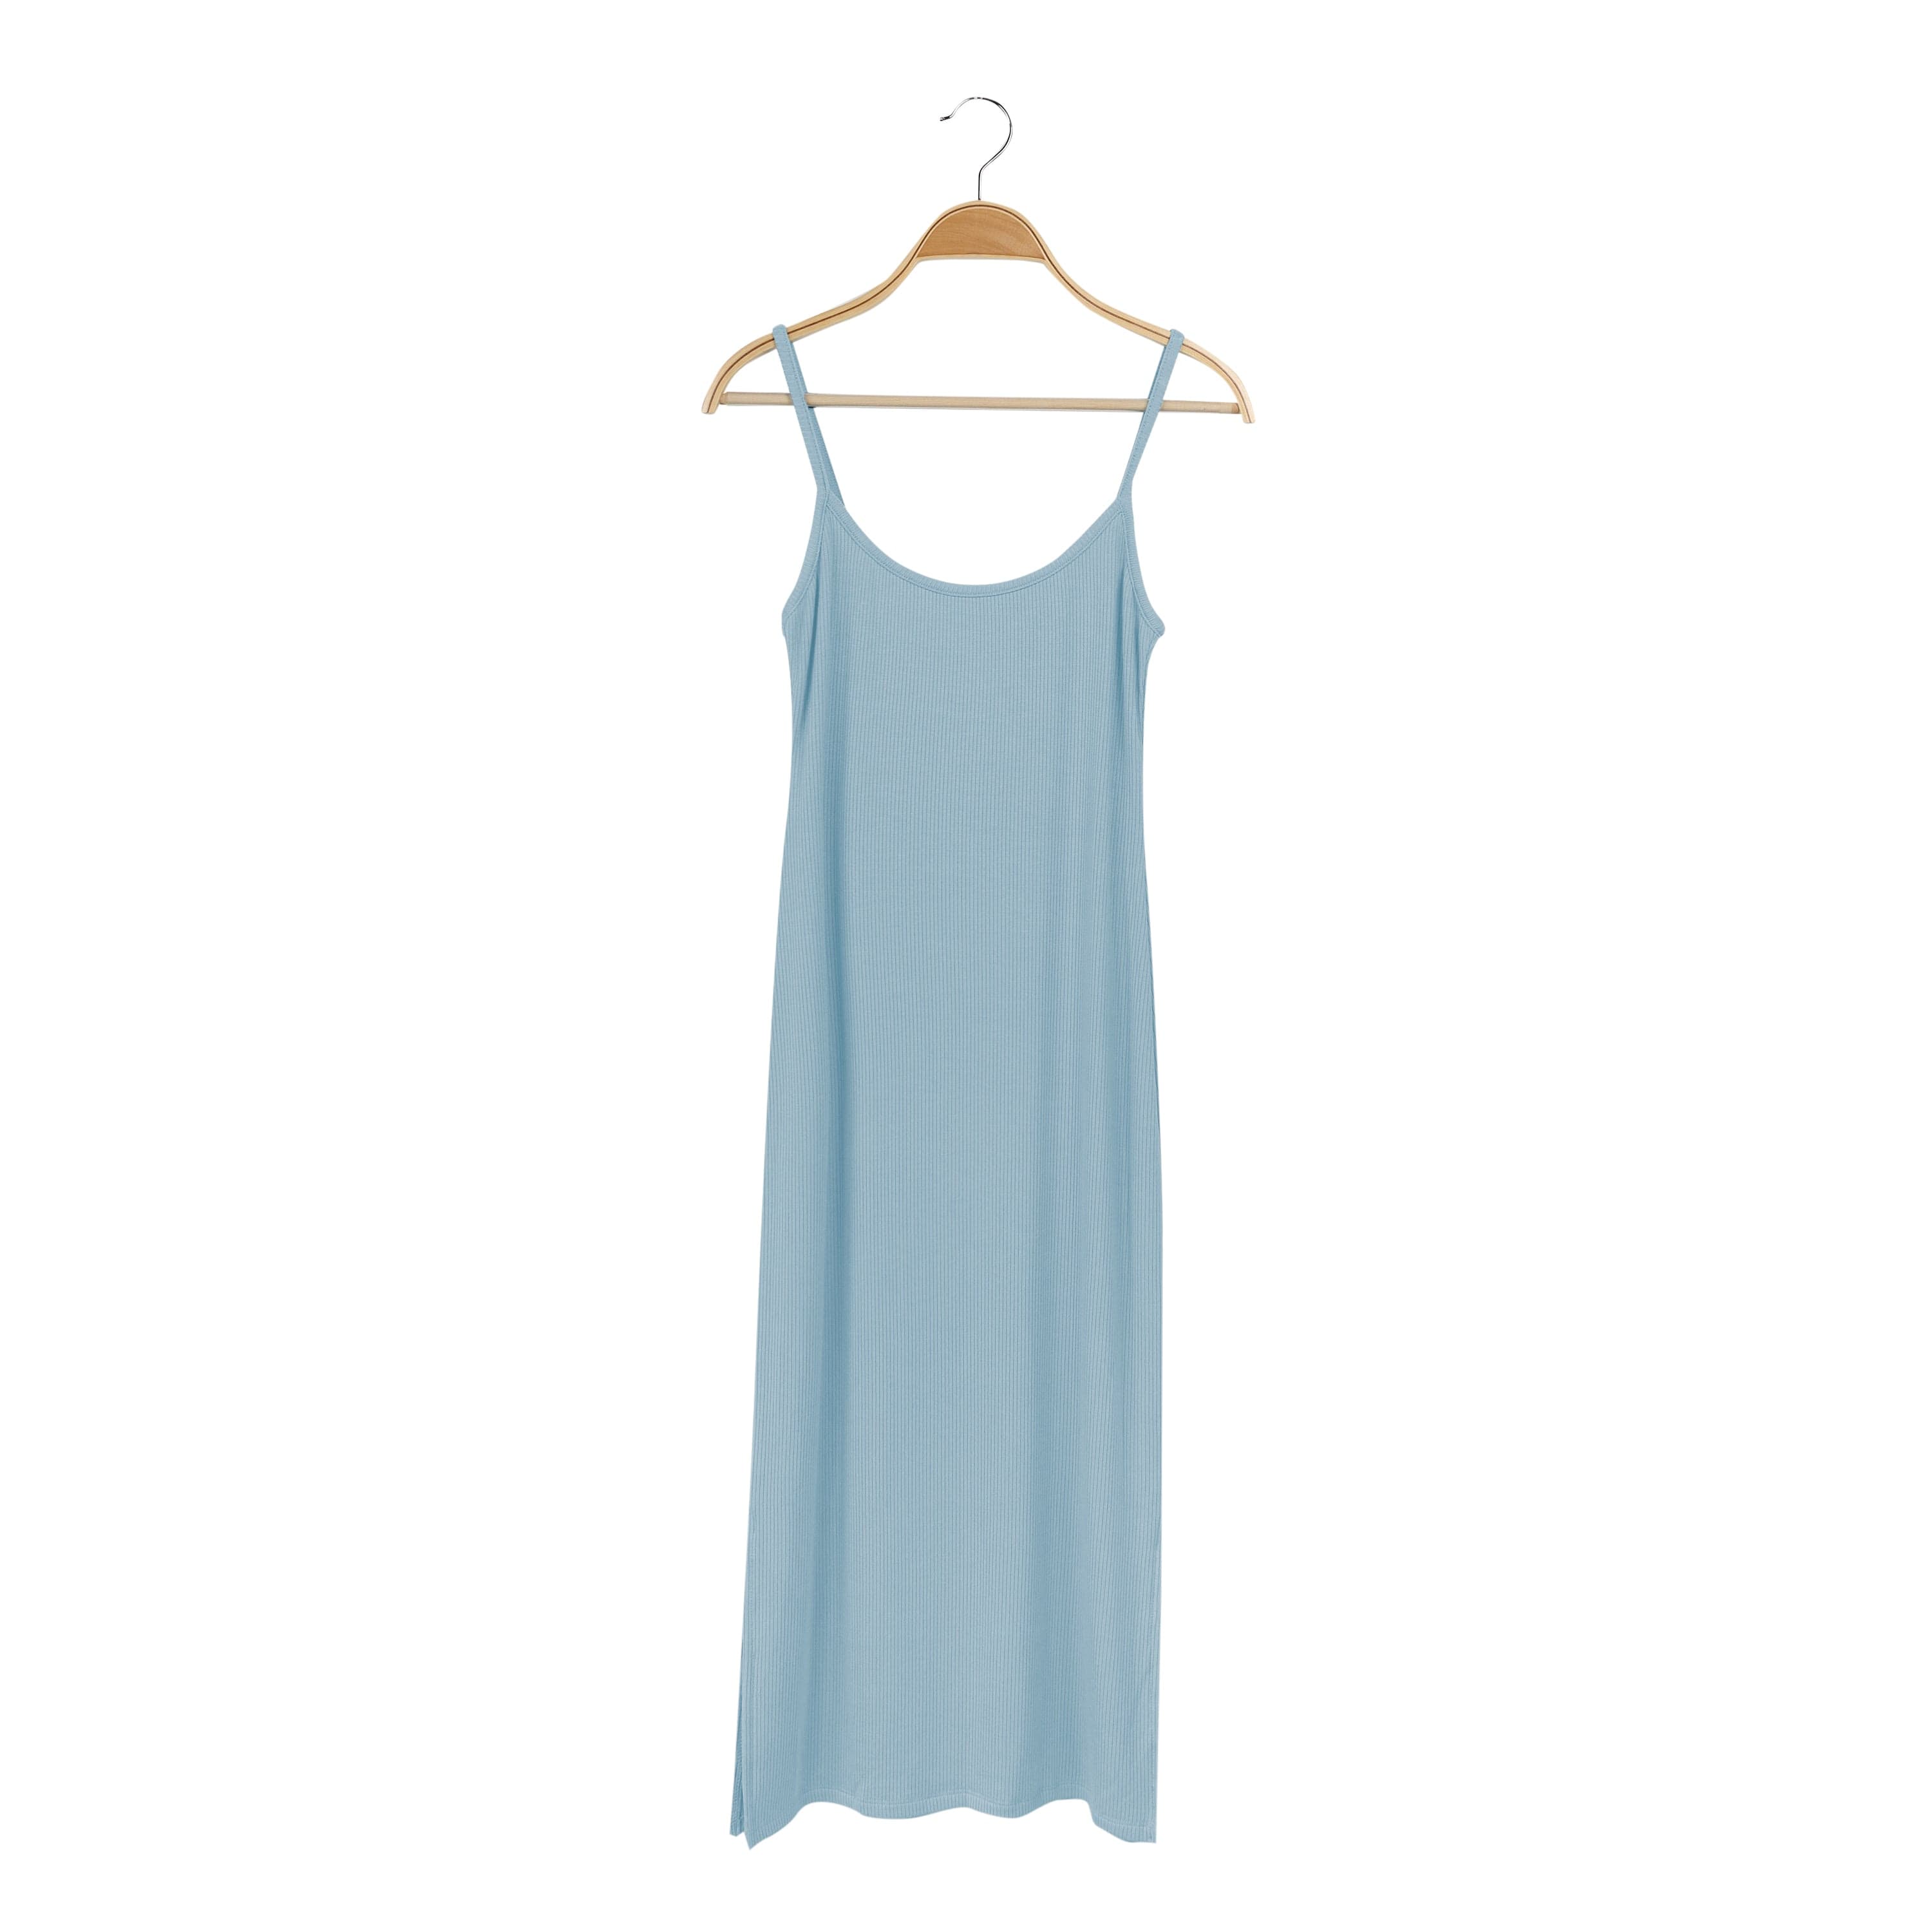 Women's Ribbed Cami Dress in Dusty Blue